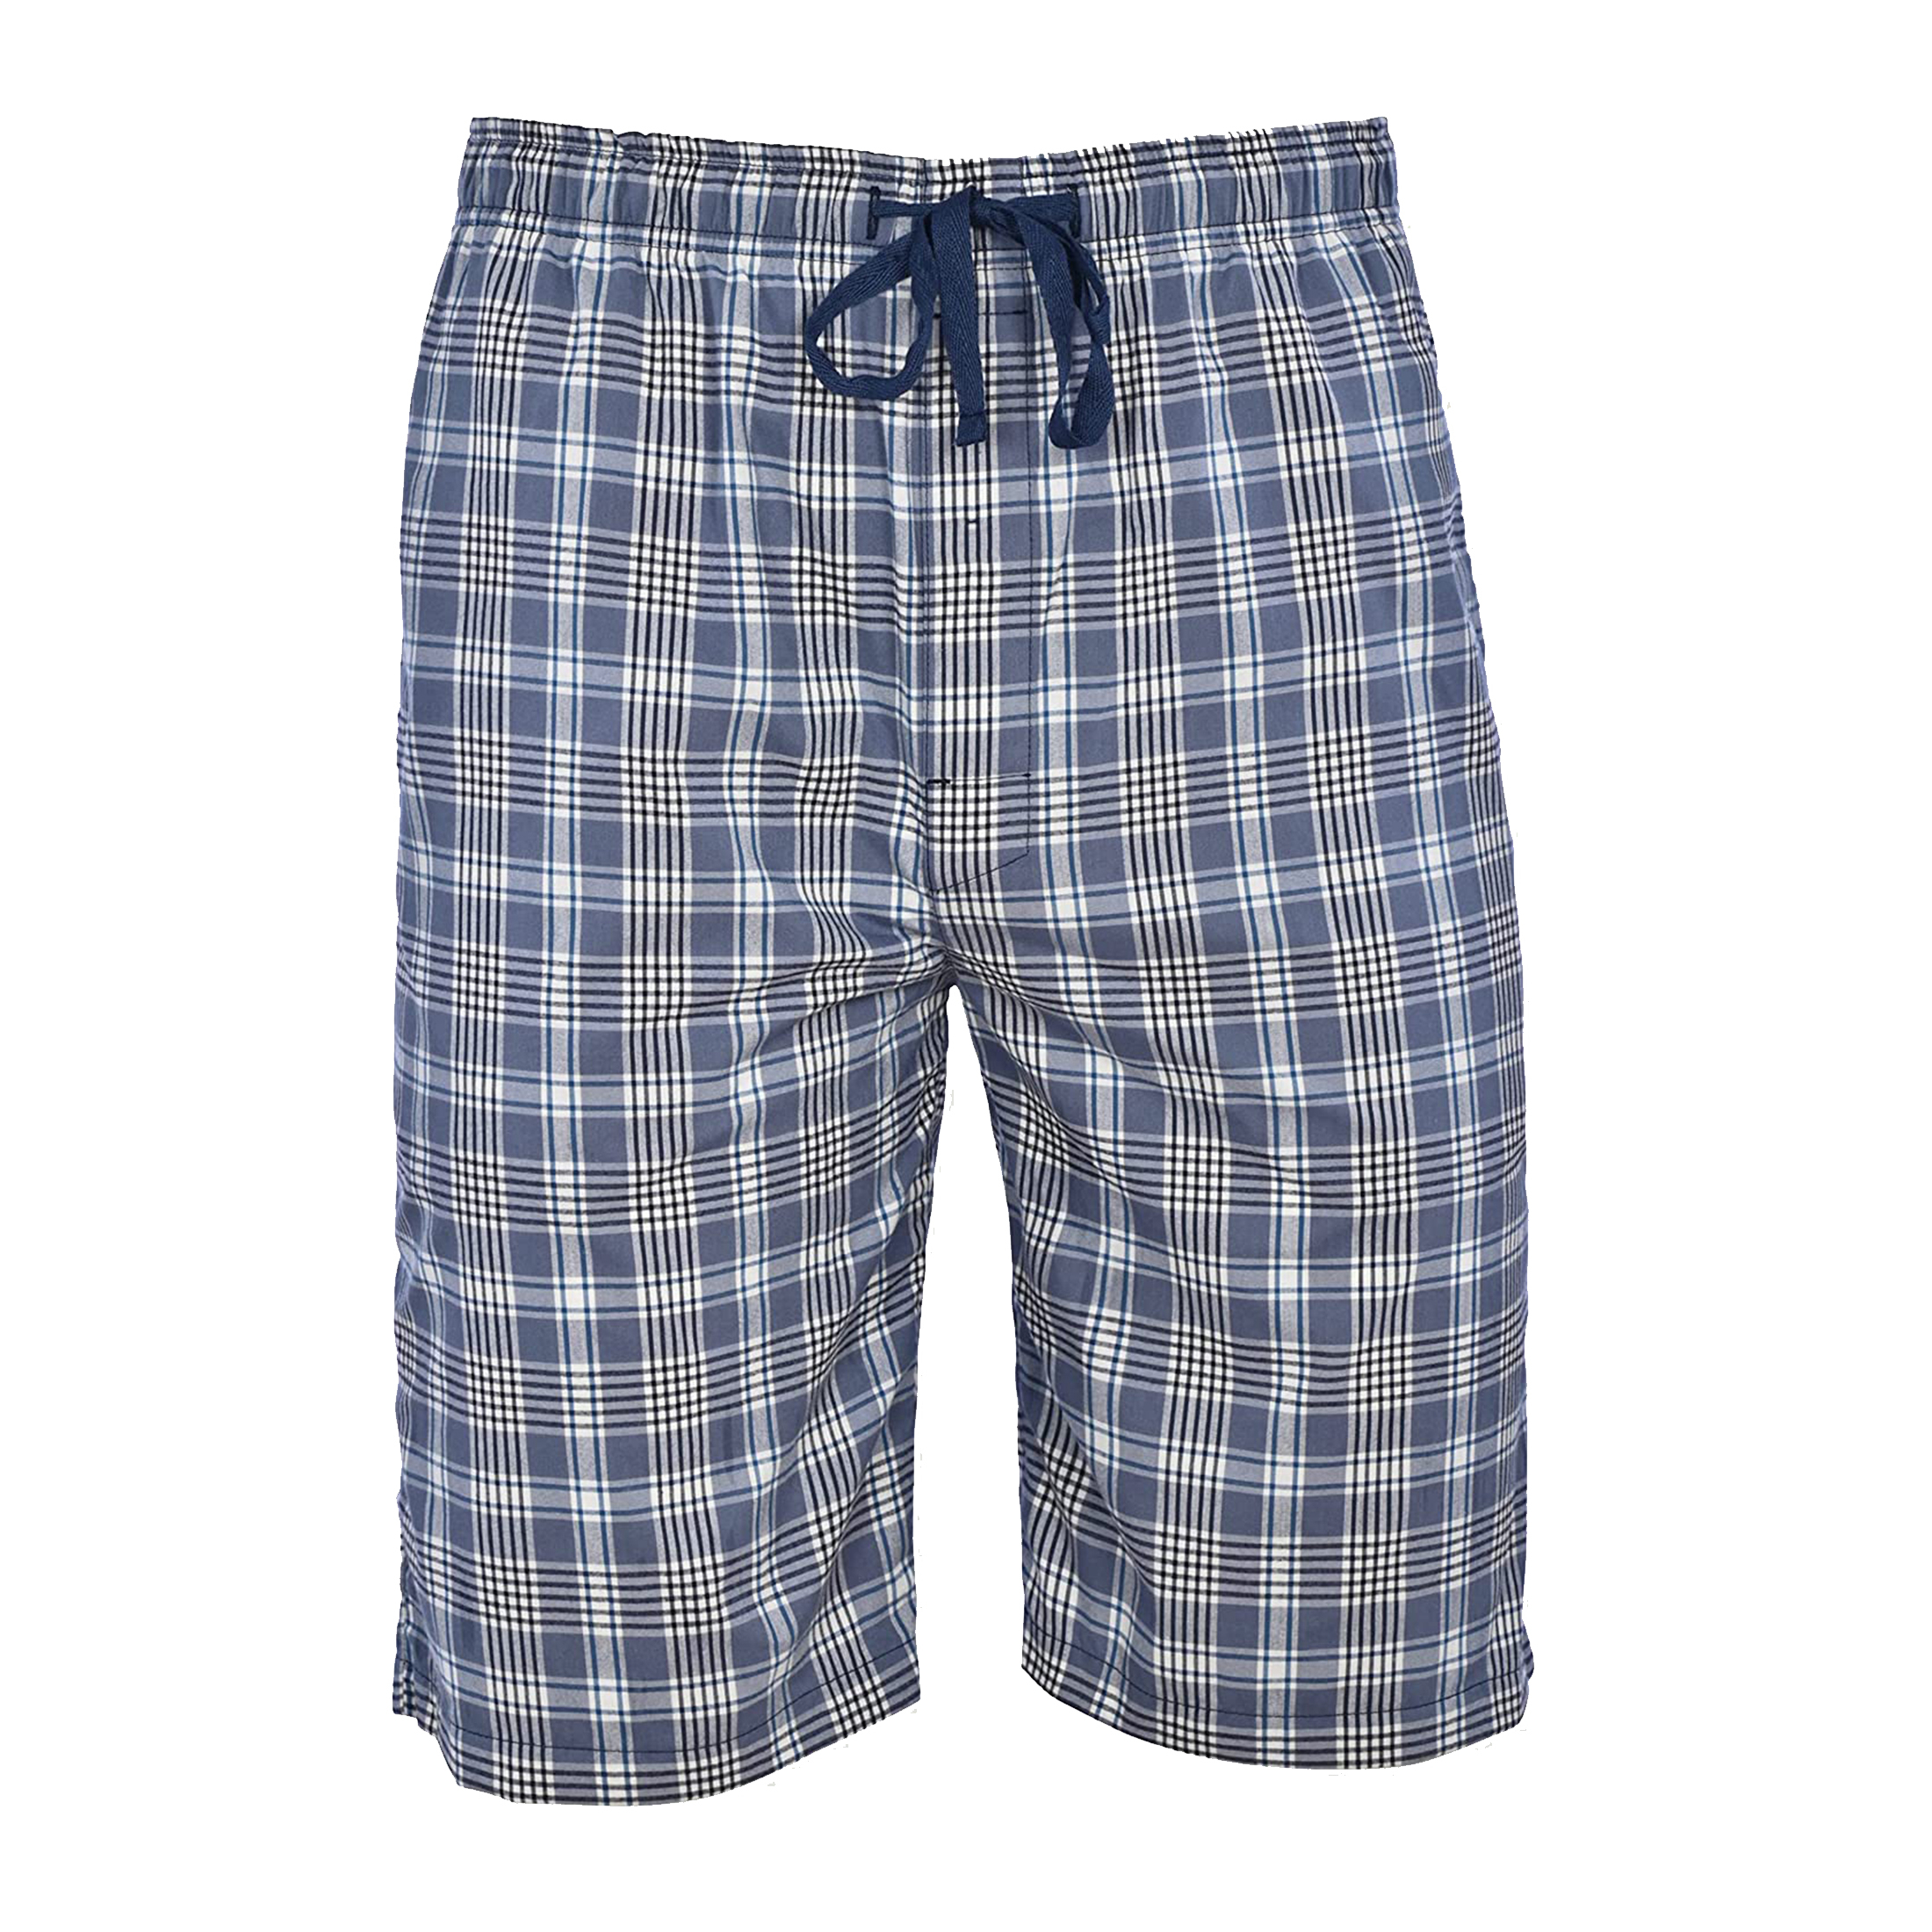 Multi-Pack: Men's Ultra-Soft Jersey Knit Sleep Lounge Pajama Shorts For Sleepwear - Plaid, 3 Pack, Medium